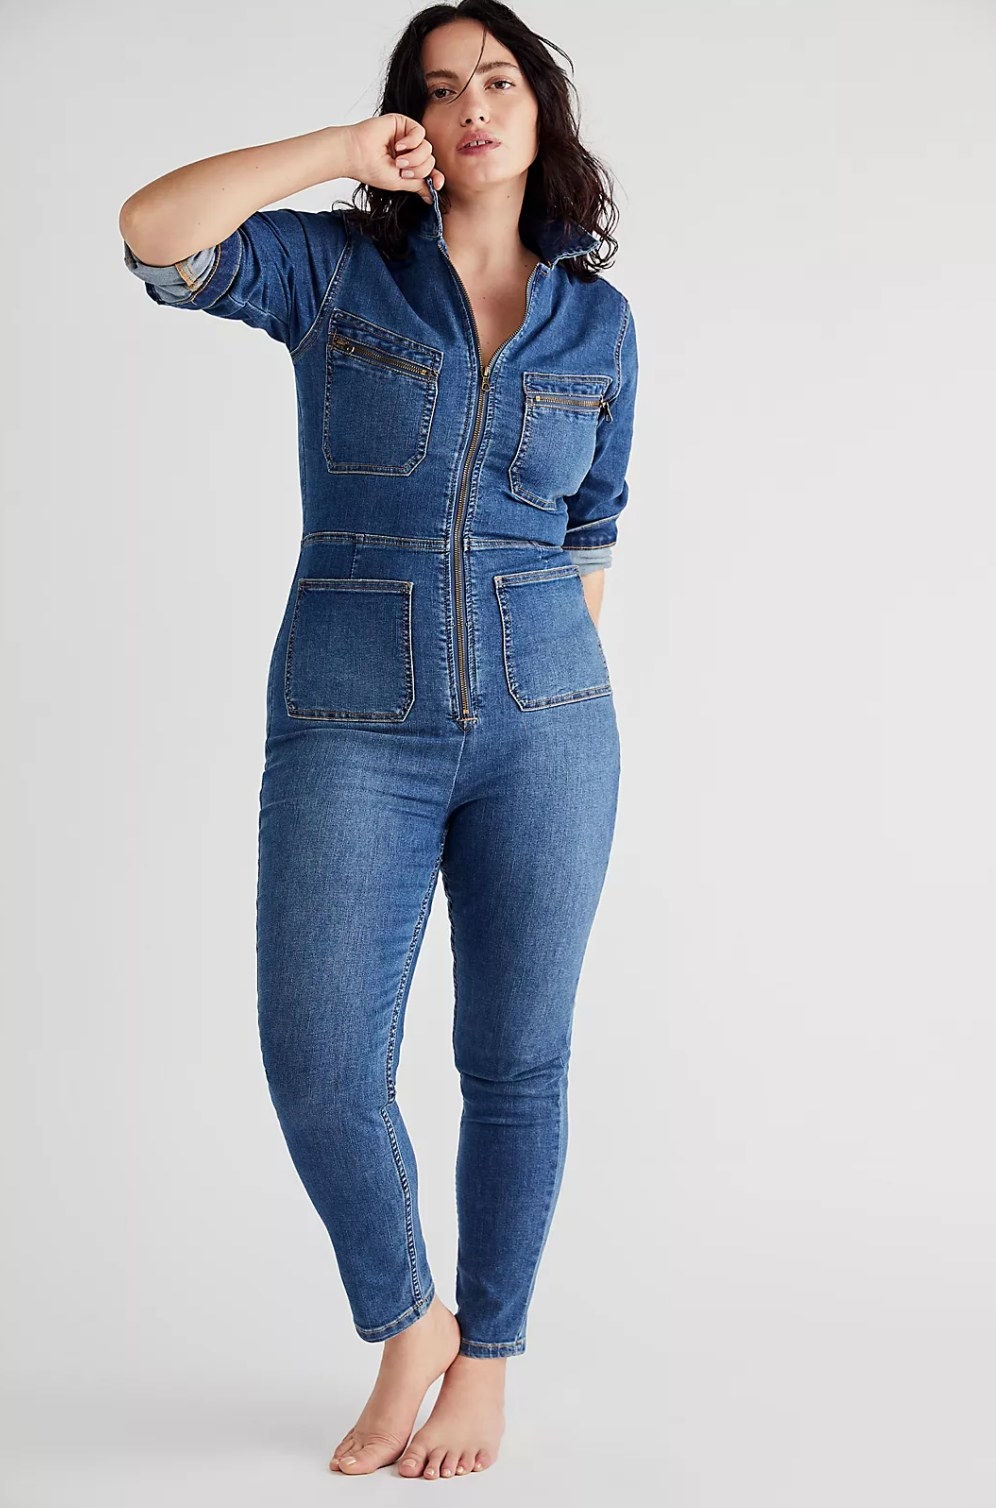 plus-sized model wearing the blue denim jumpsuit